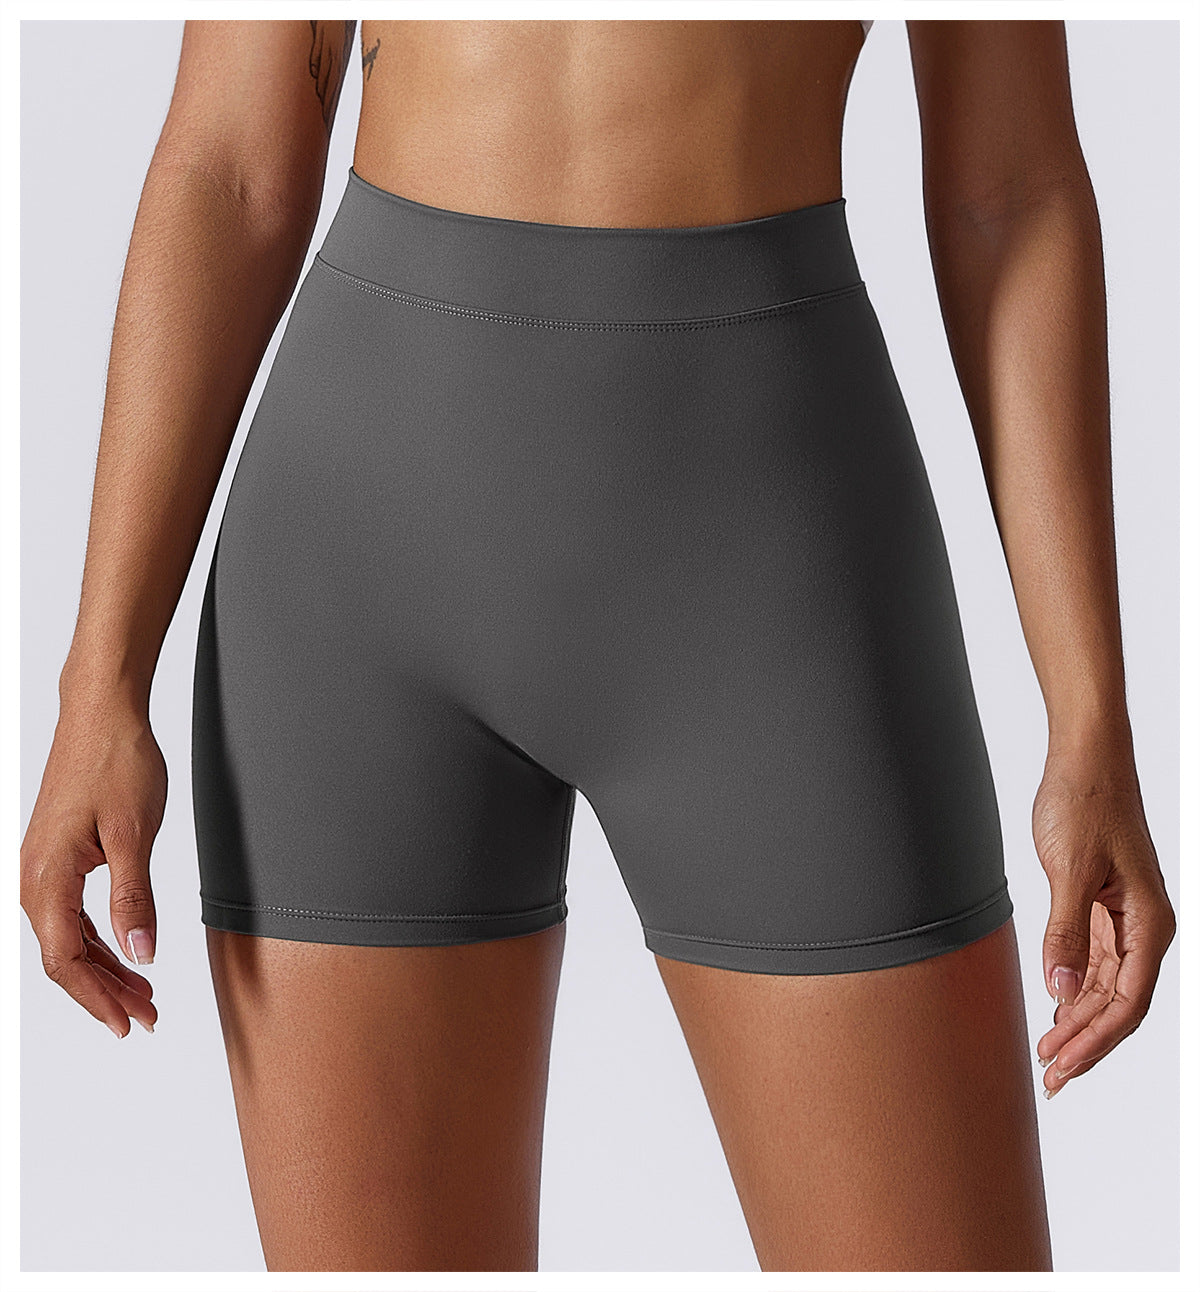 Brushed yoga pants hip-lifting fitness pants outerwear running sports pants women 8175